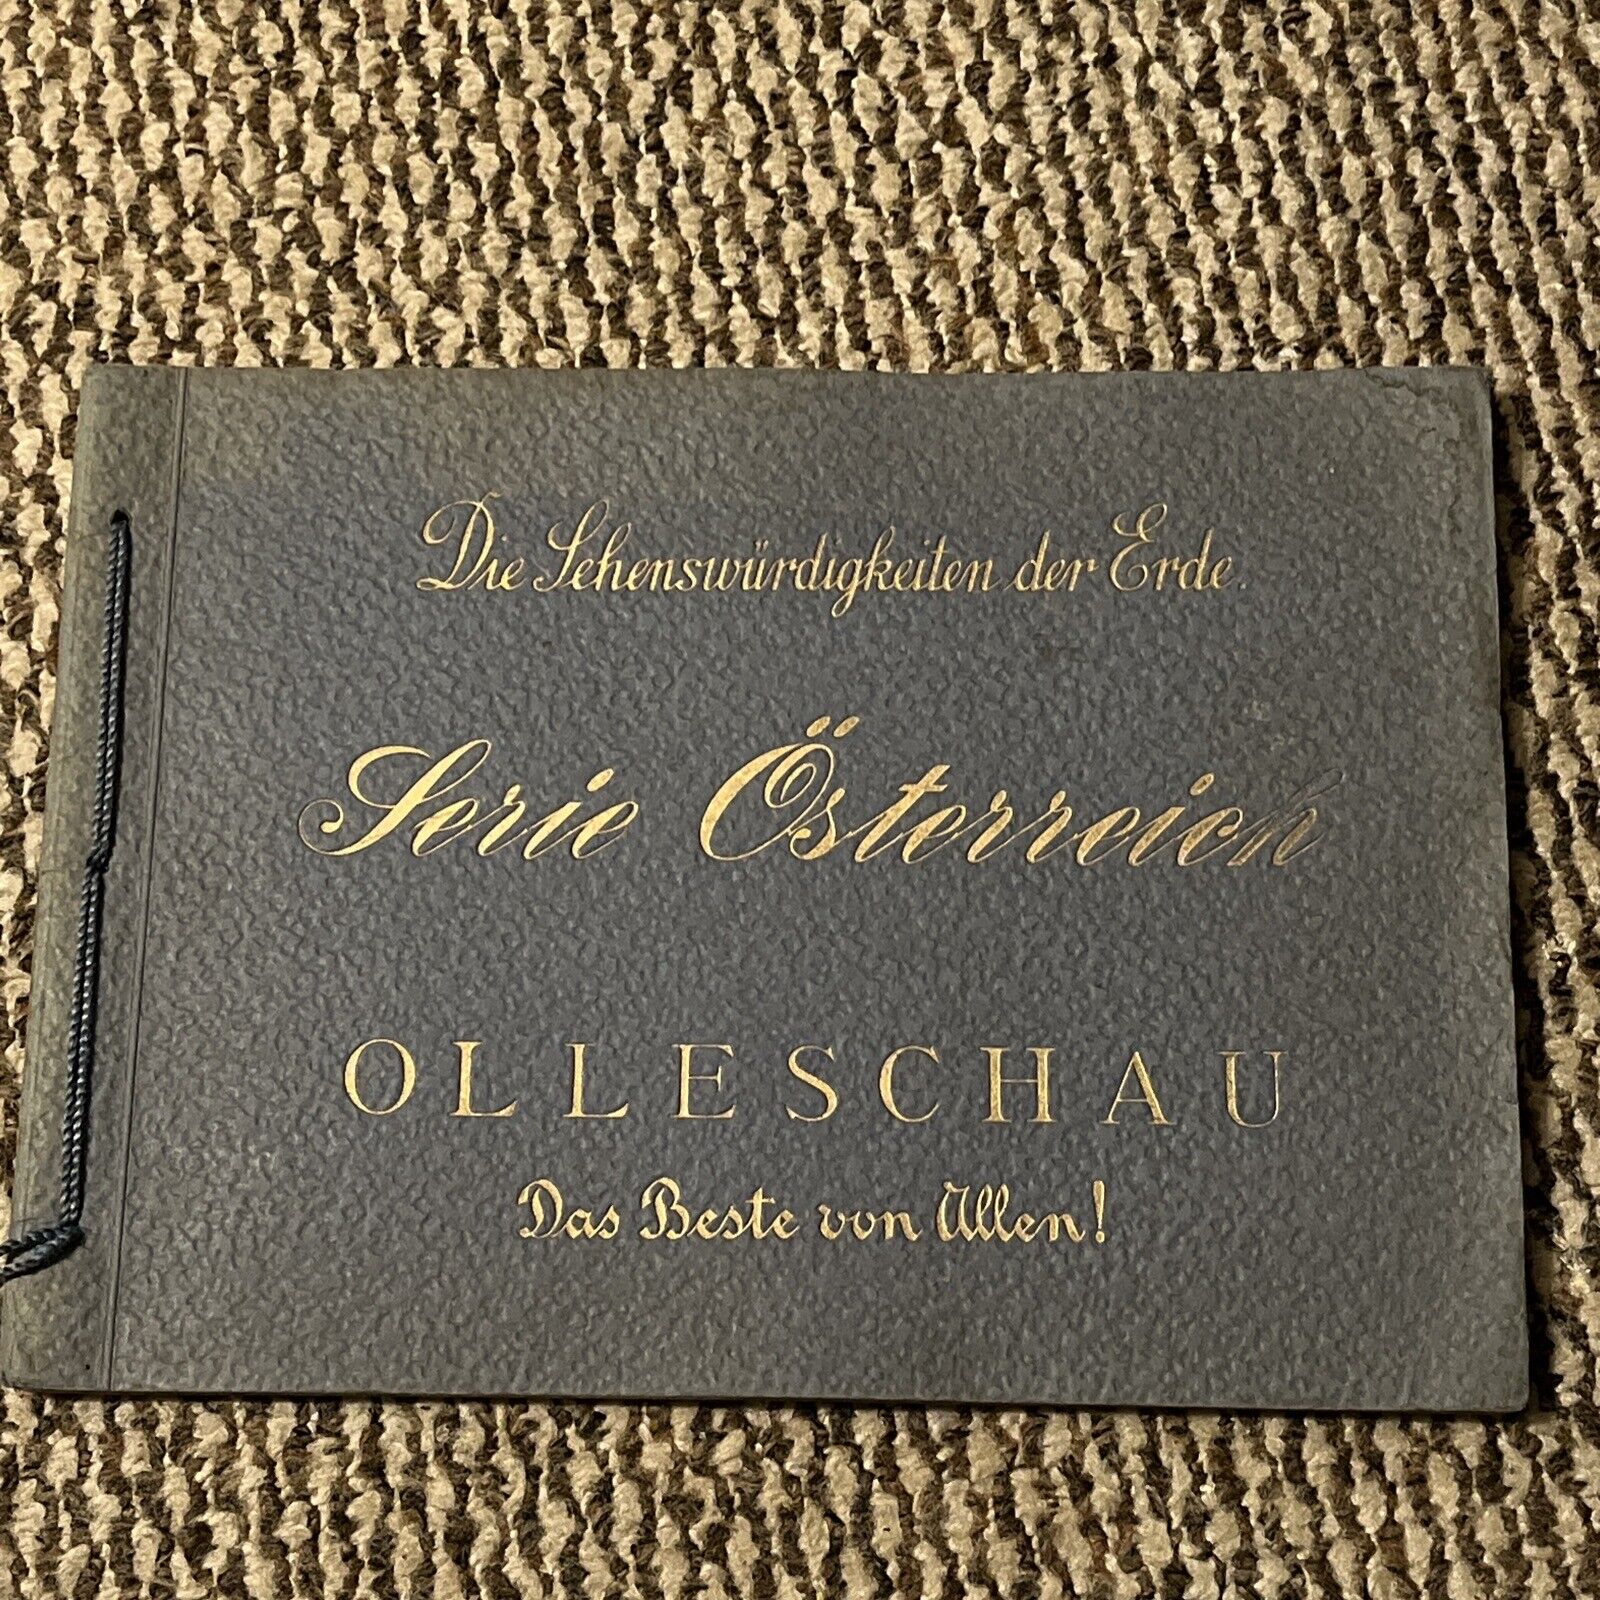 1930s Era SERIE OSTERREIEN Tobacco Cigarette Card Album German 90 Cards Ex Cond